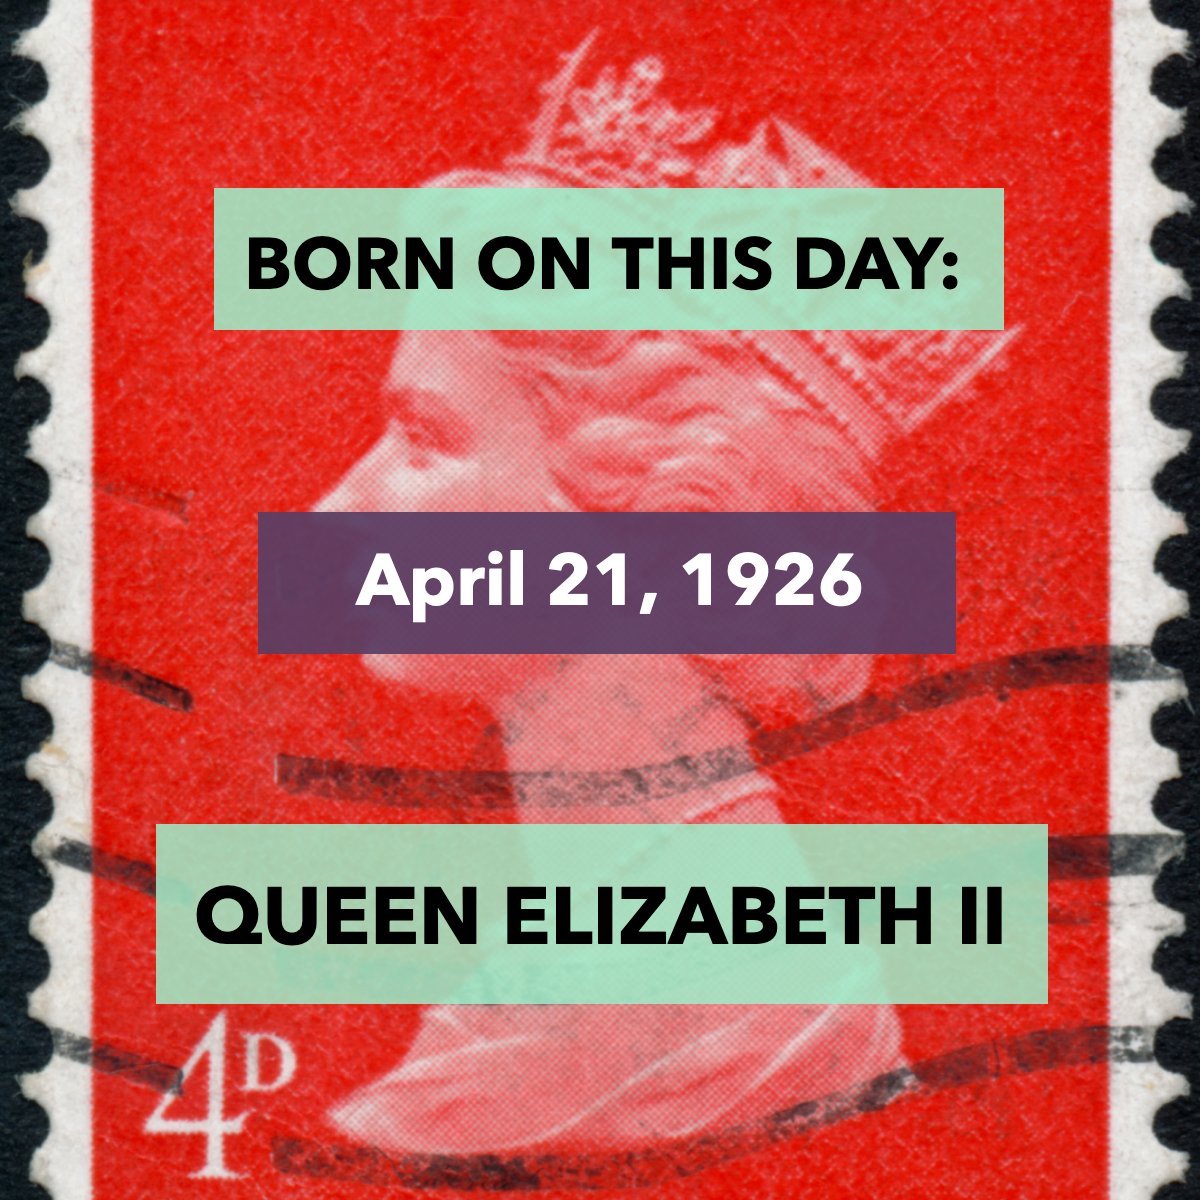 Today marks the birthday of Queen Elizabeth II

She was Britain's longest-reigning monarch

#queen👑  #borntoday #bornonthisday #famousbirthdays 
 #cincyrealtors #scavonerealtor #cincinnatirealestate #togetherwemakedealshappen #lebanonohio #greatercincinnatirealtors